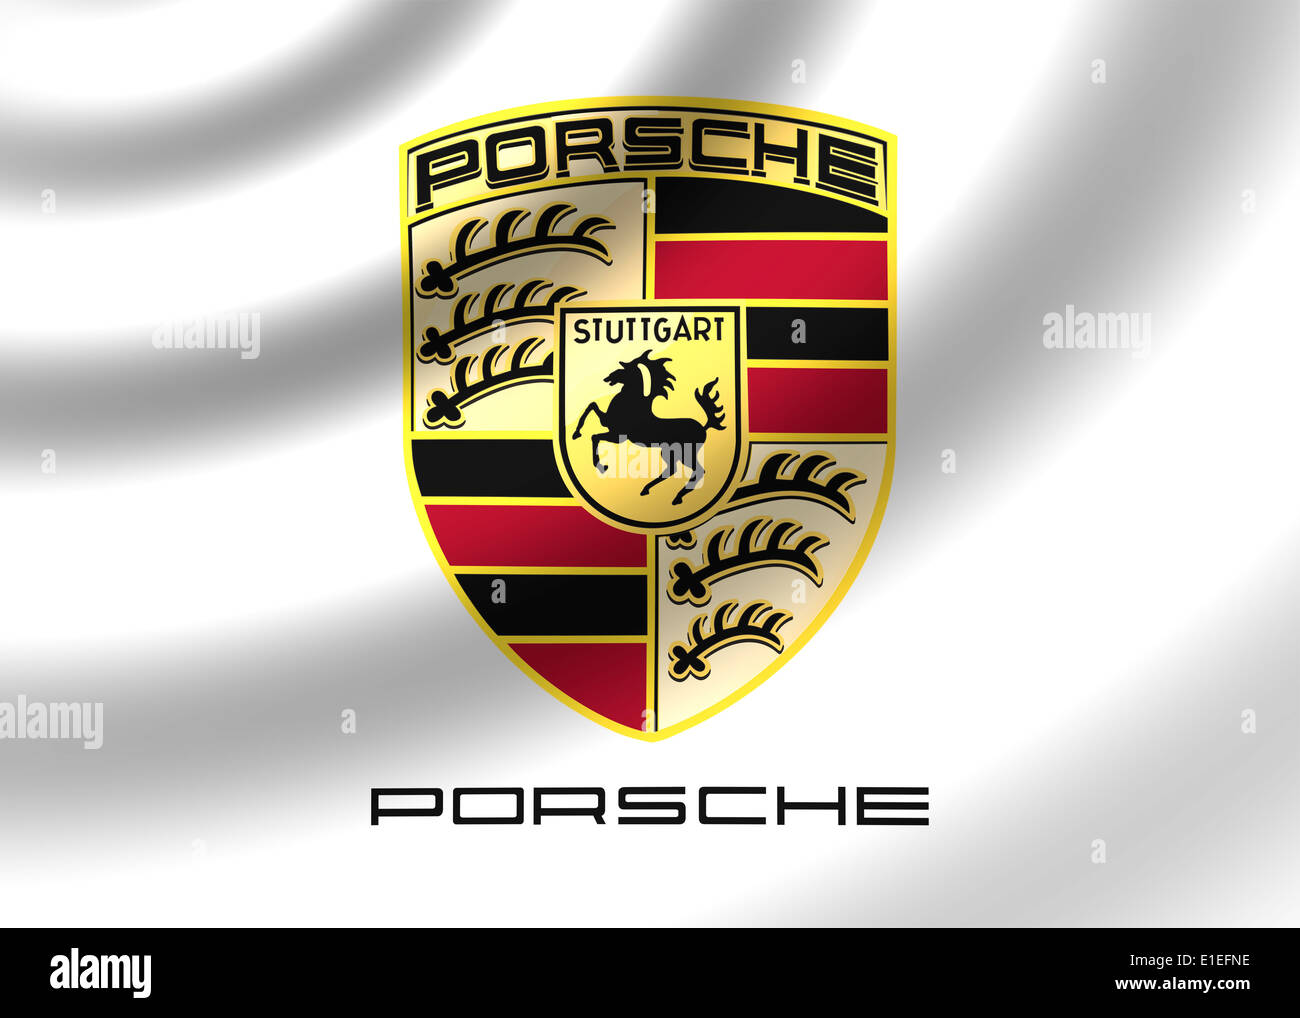 Porsche logo symbol icon flag emblem Stock Photo - Alamy